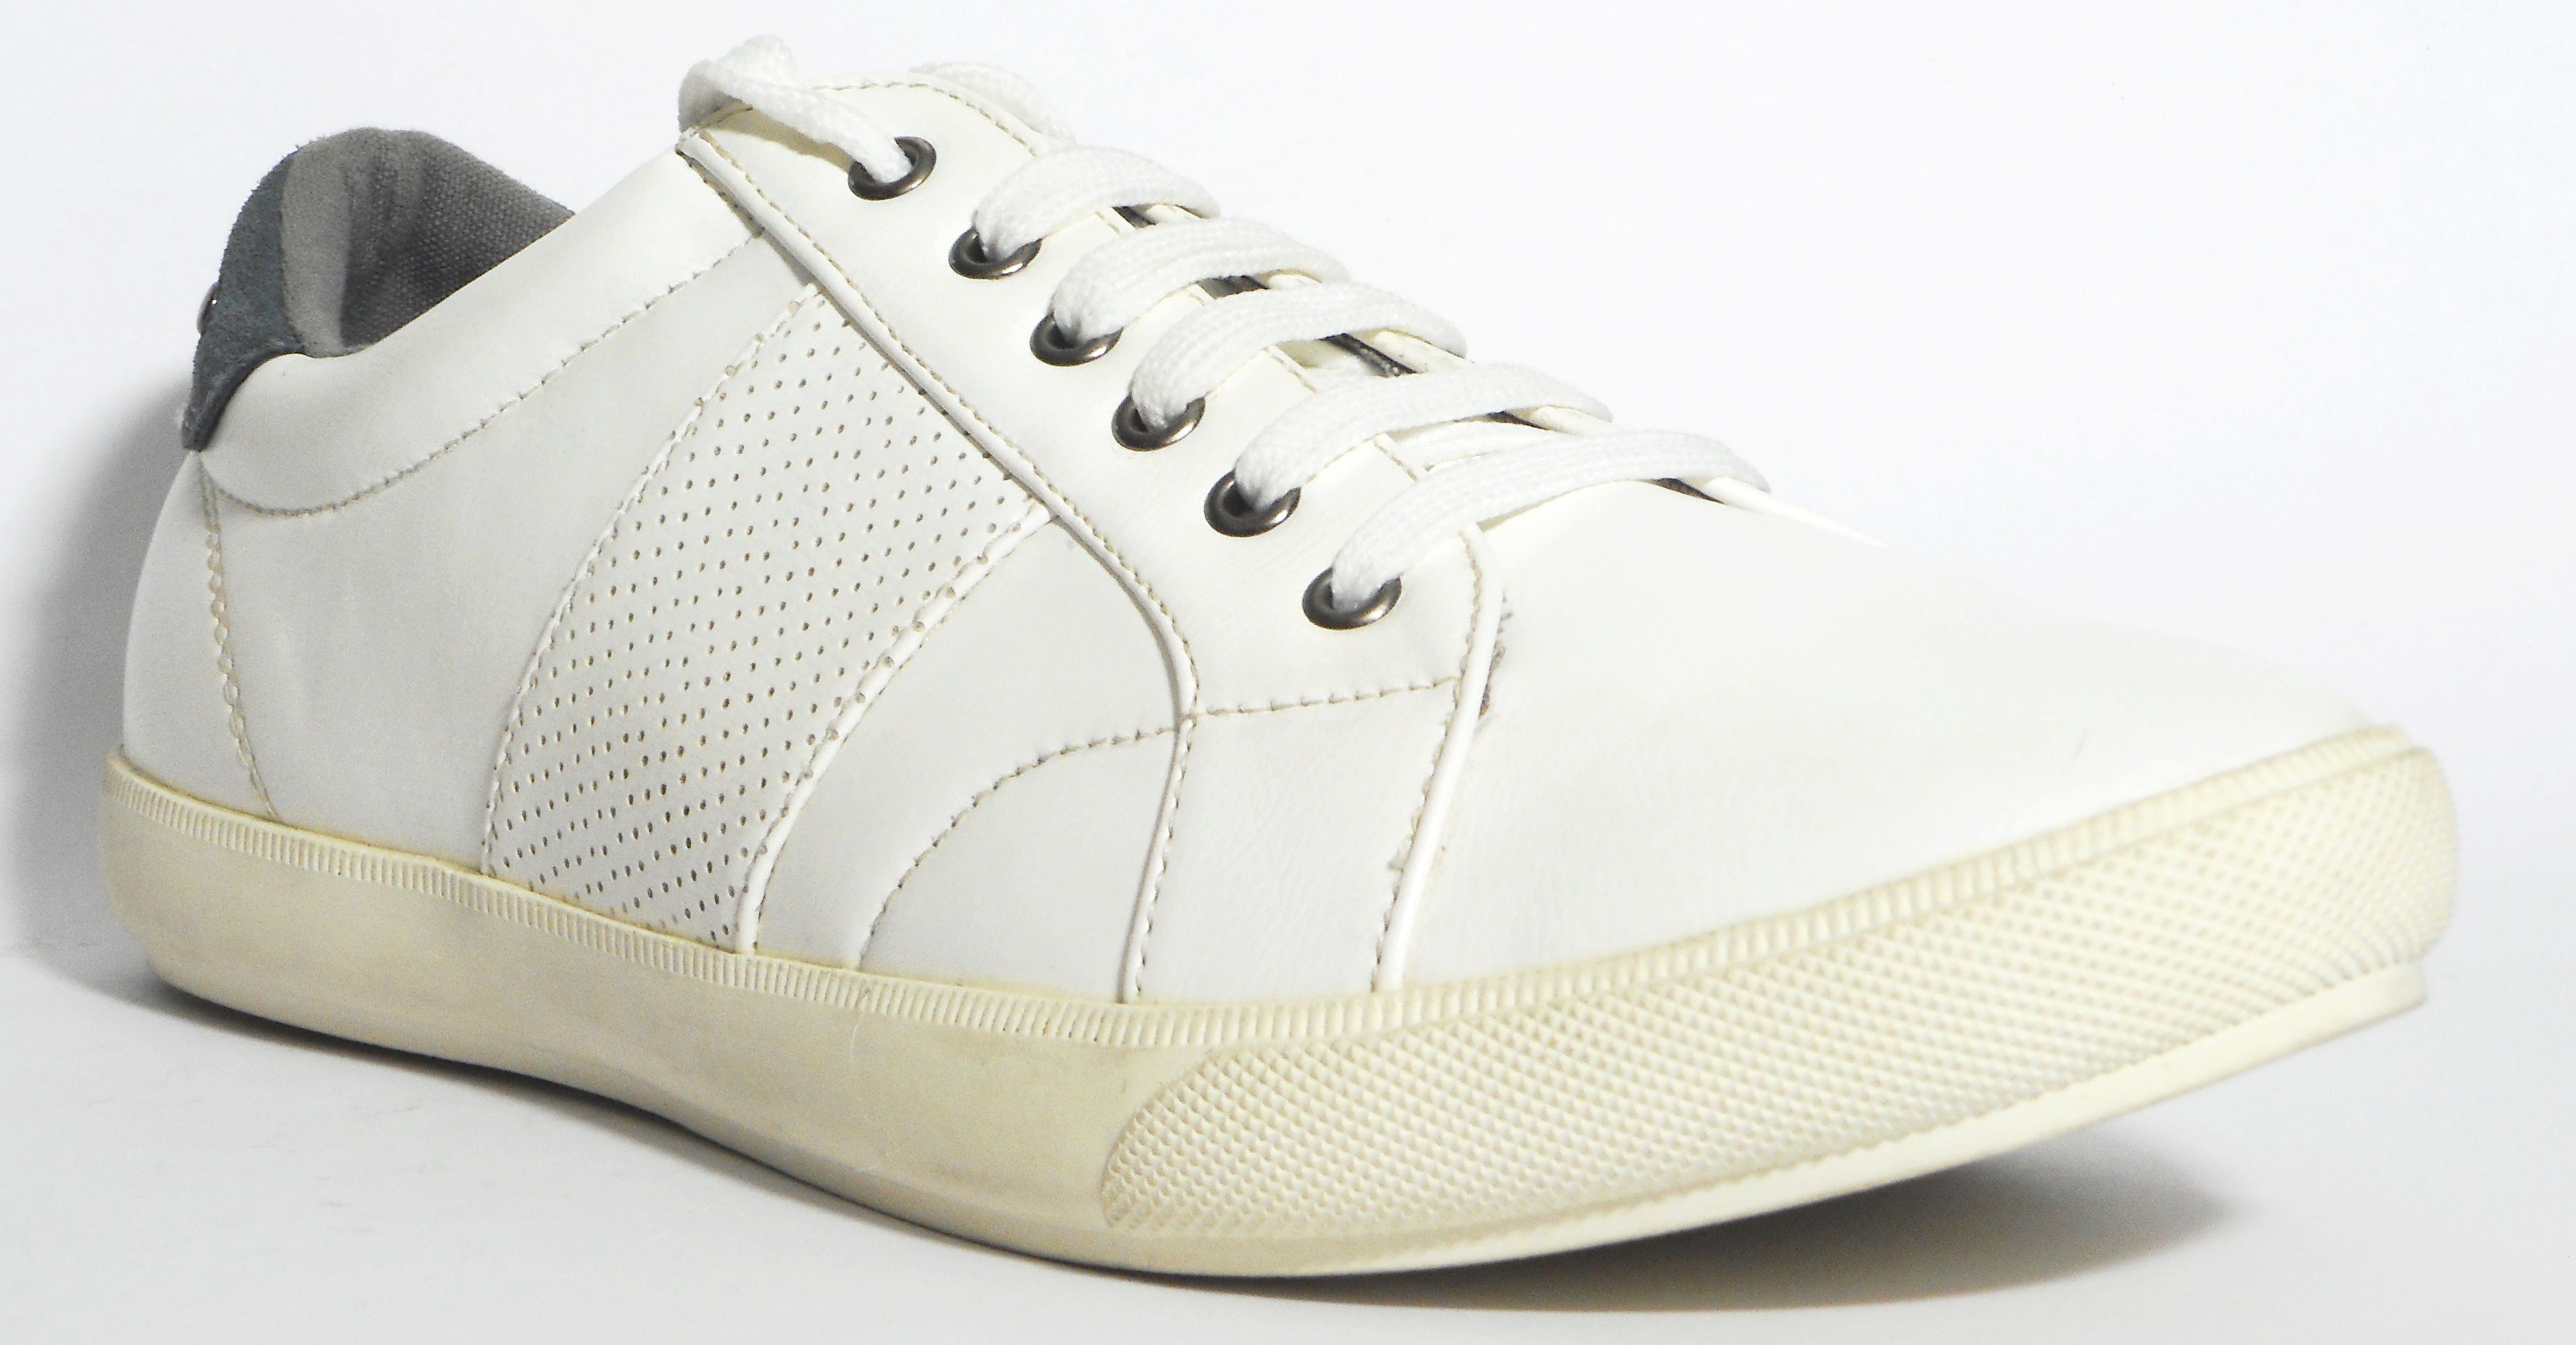 Numero Uno NU-480 Lifestyle White Casual Shoes - Buy Numero Uno NU-480 ...